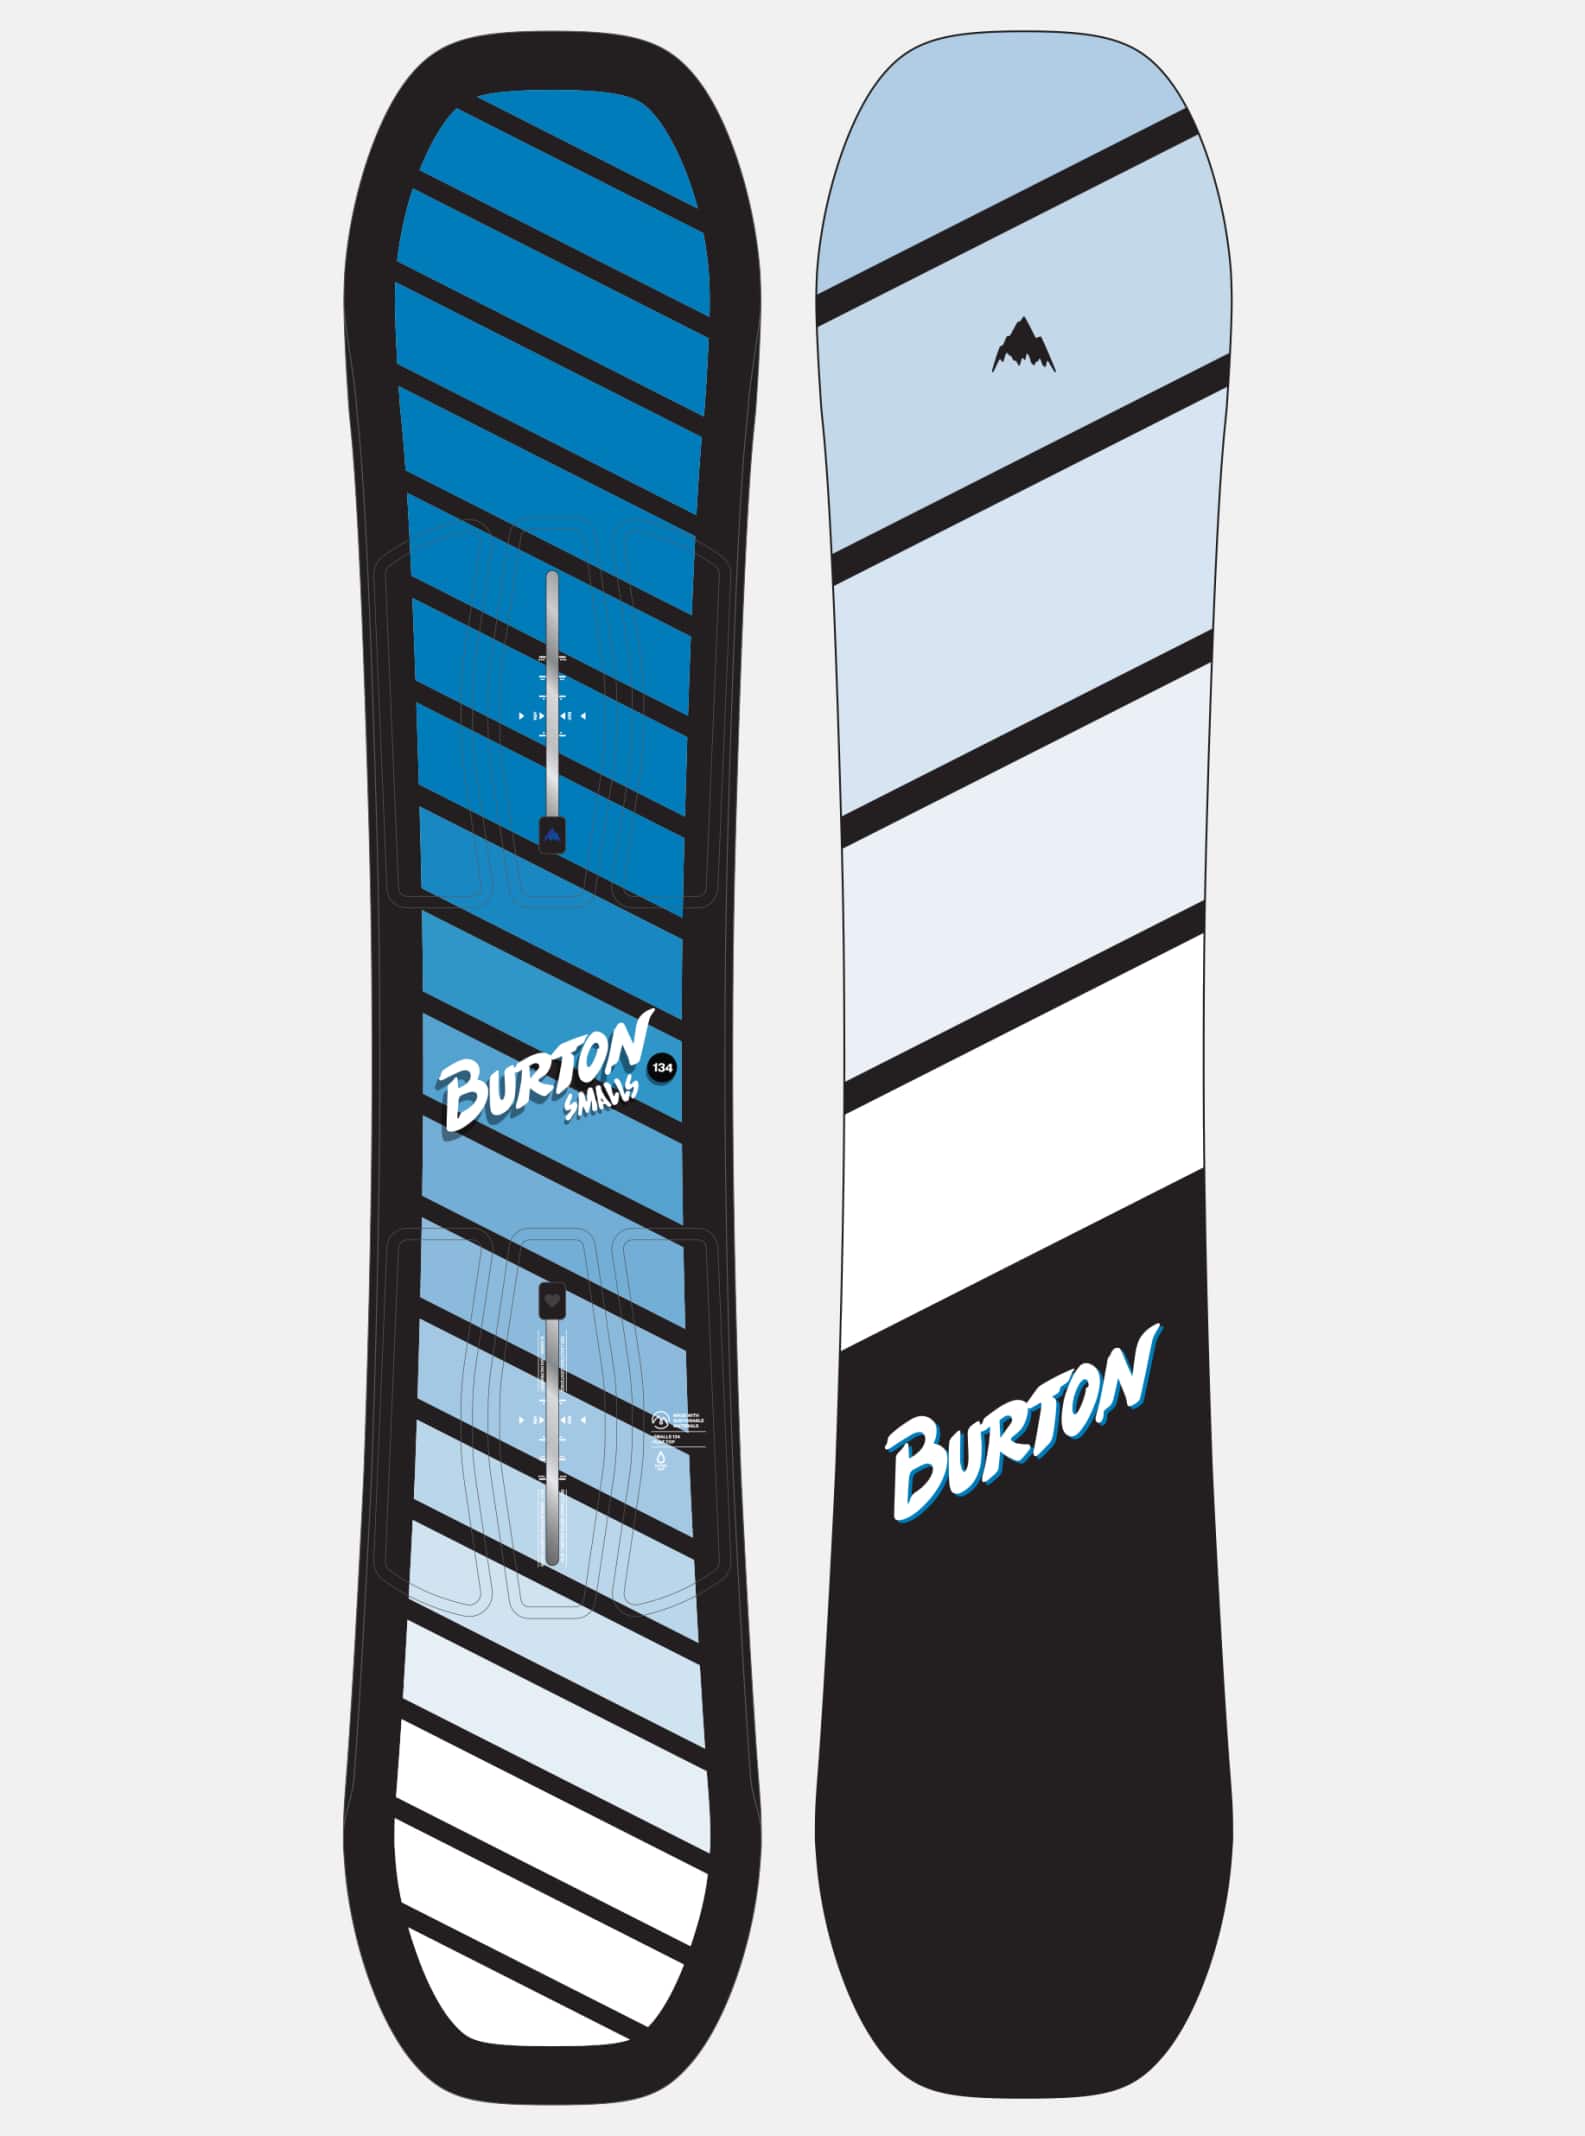 Burton Ripcord Snowboard 2016バインディング付き